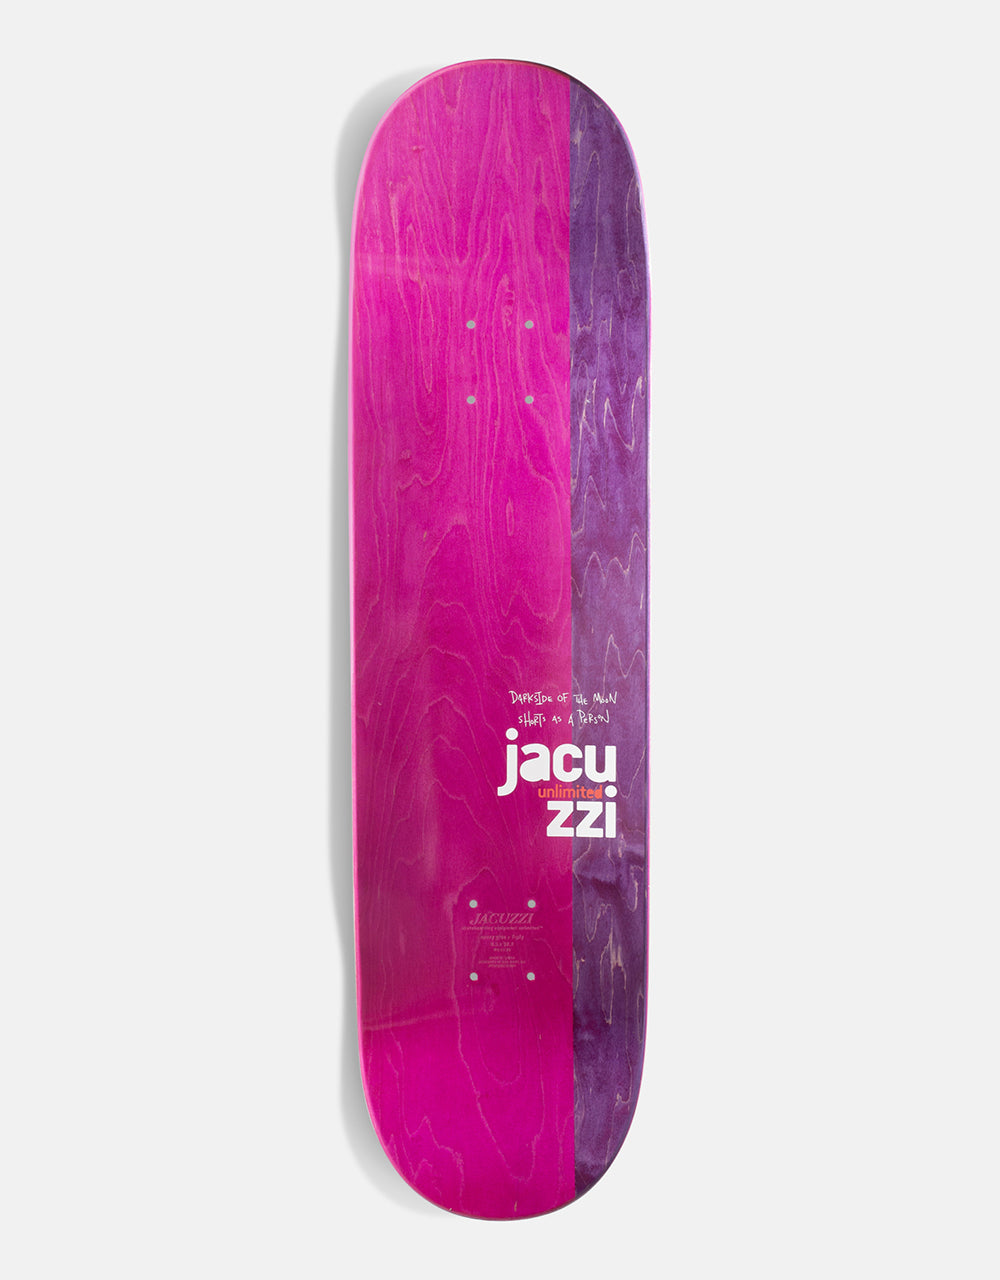 Jacuzzi Unlimited Barletta Great Escape EX7 Skateboard Deck - 8.5"